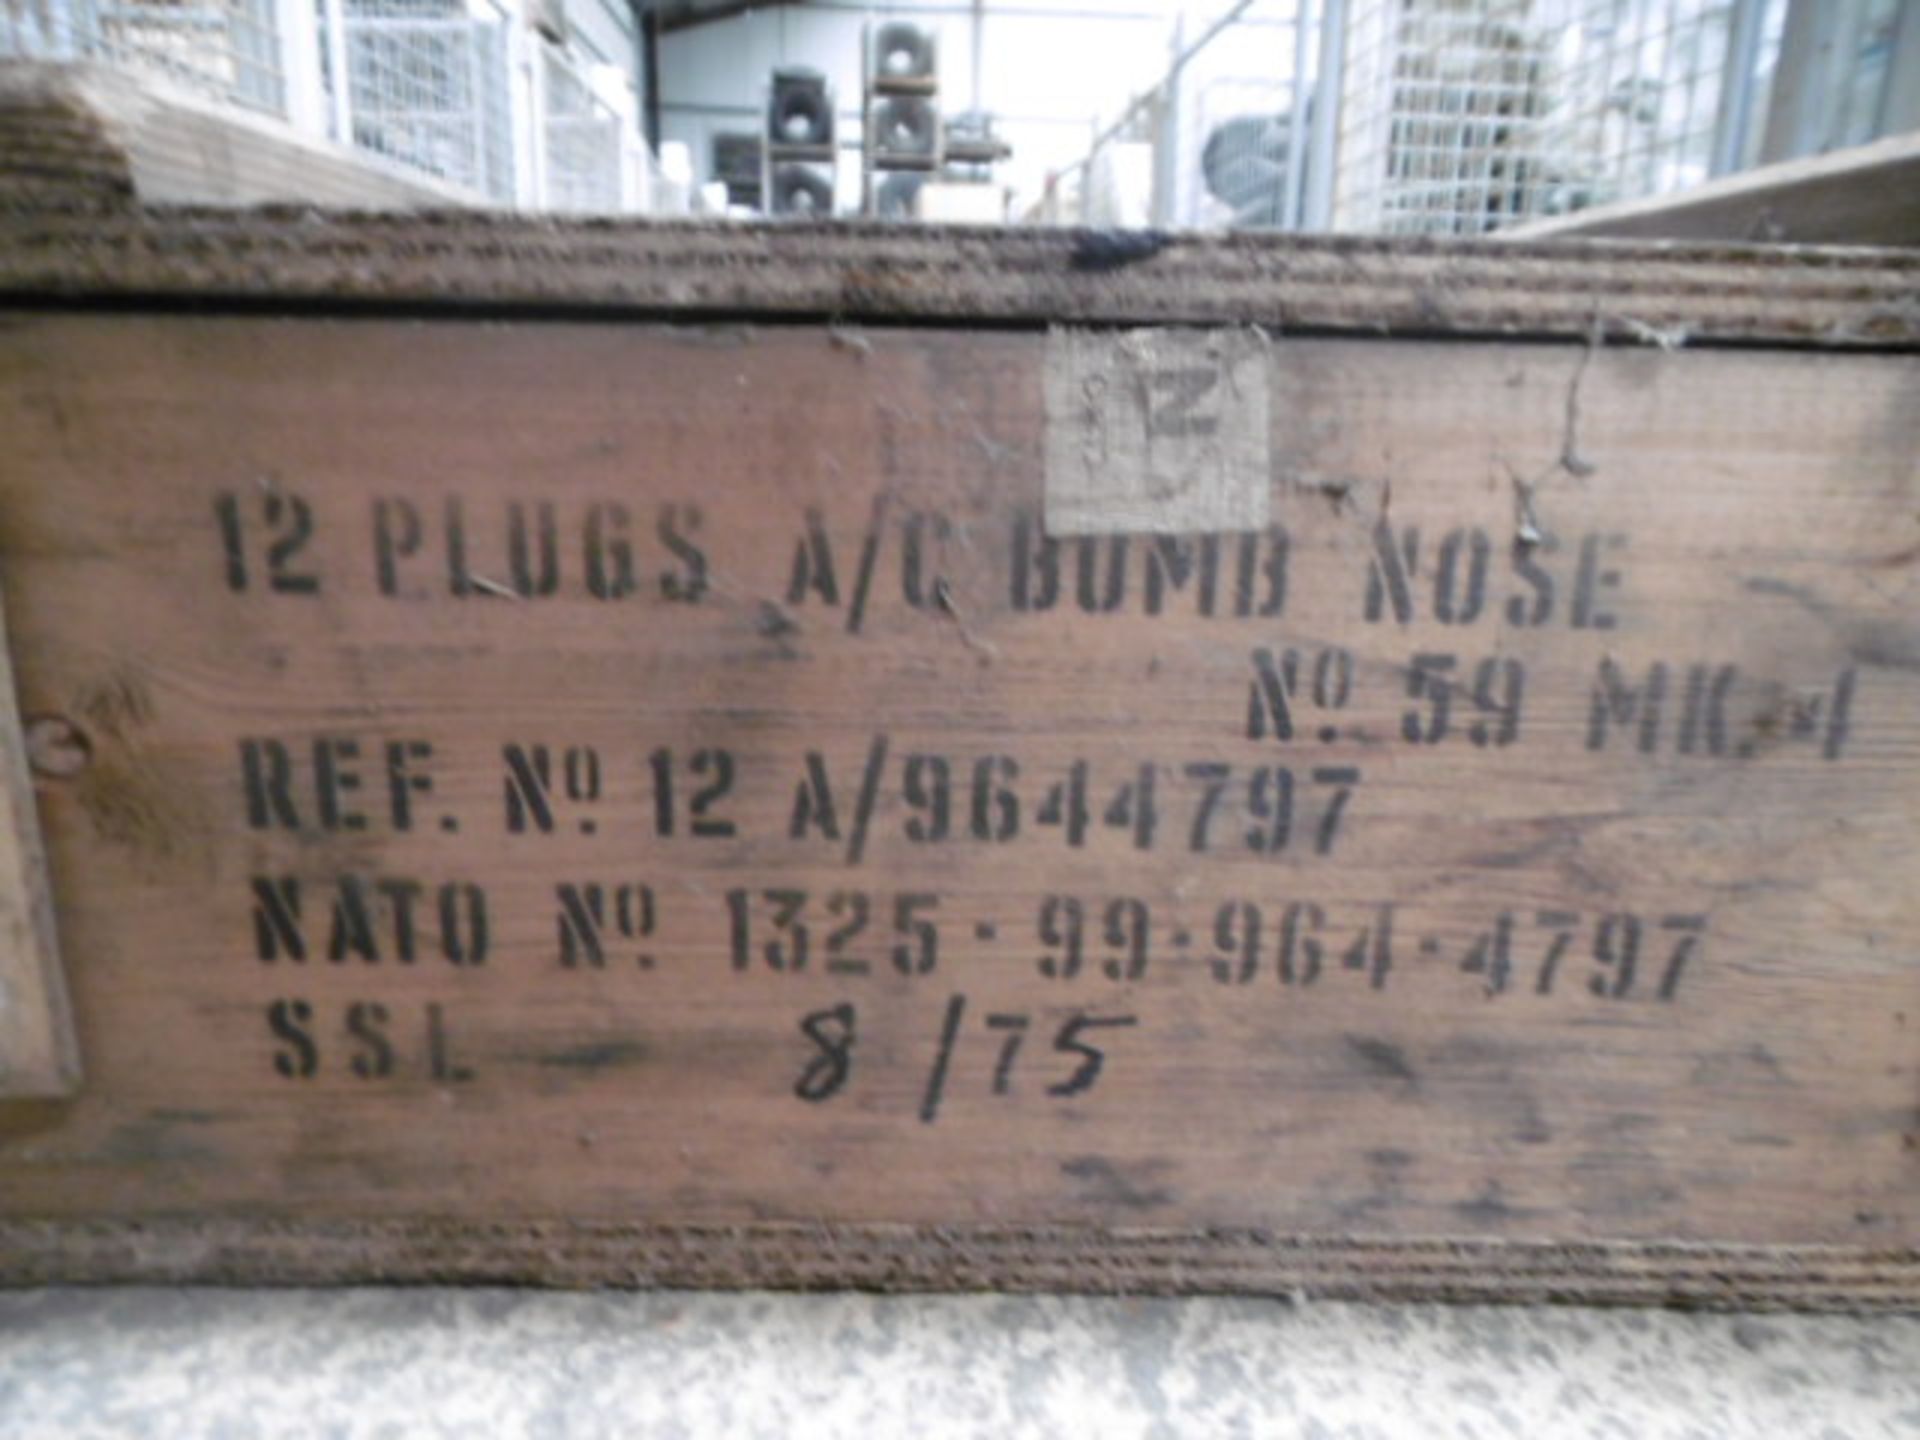 12 x No. 59 A/C Bomb Nose Plugs - Image 6 of 6